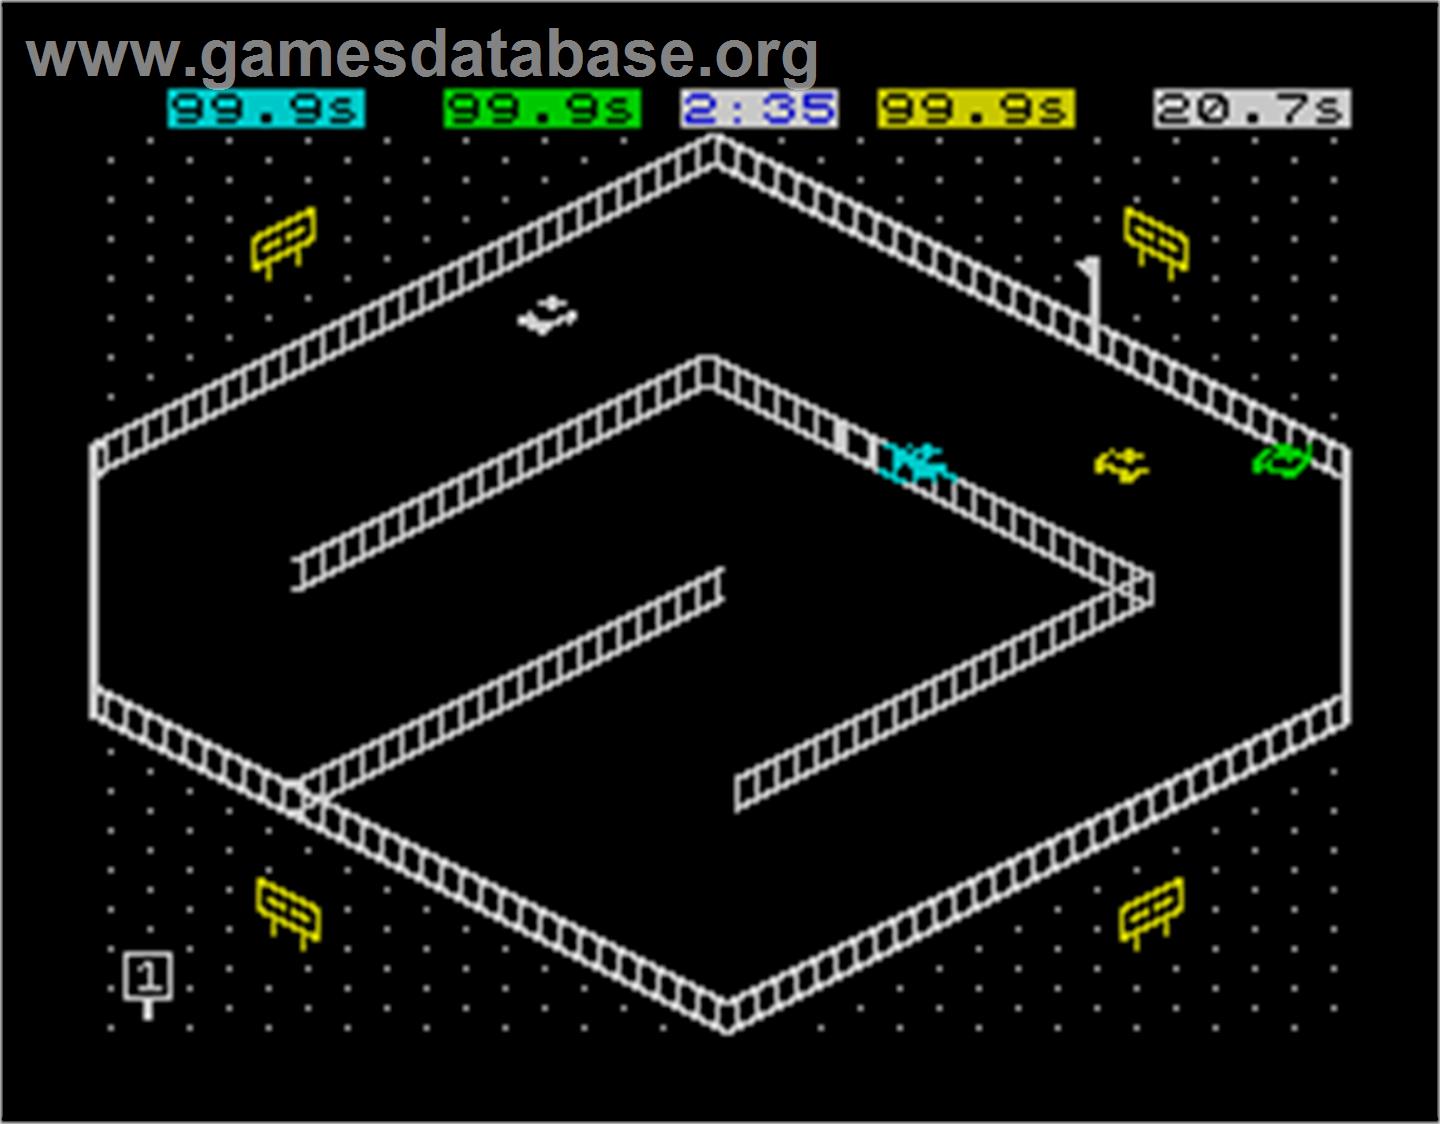 3D Stock Car Championship - Sinclair ZX Spectrum - Artwork - In Game